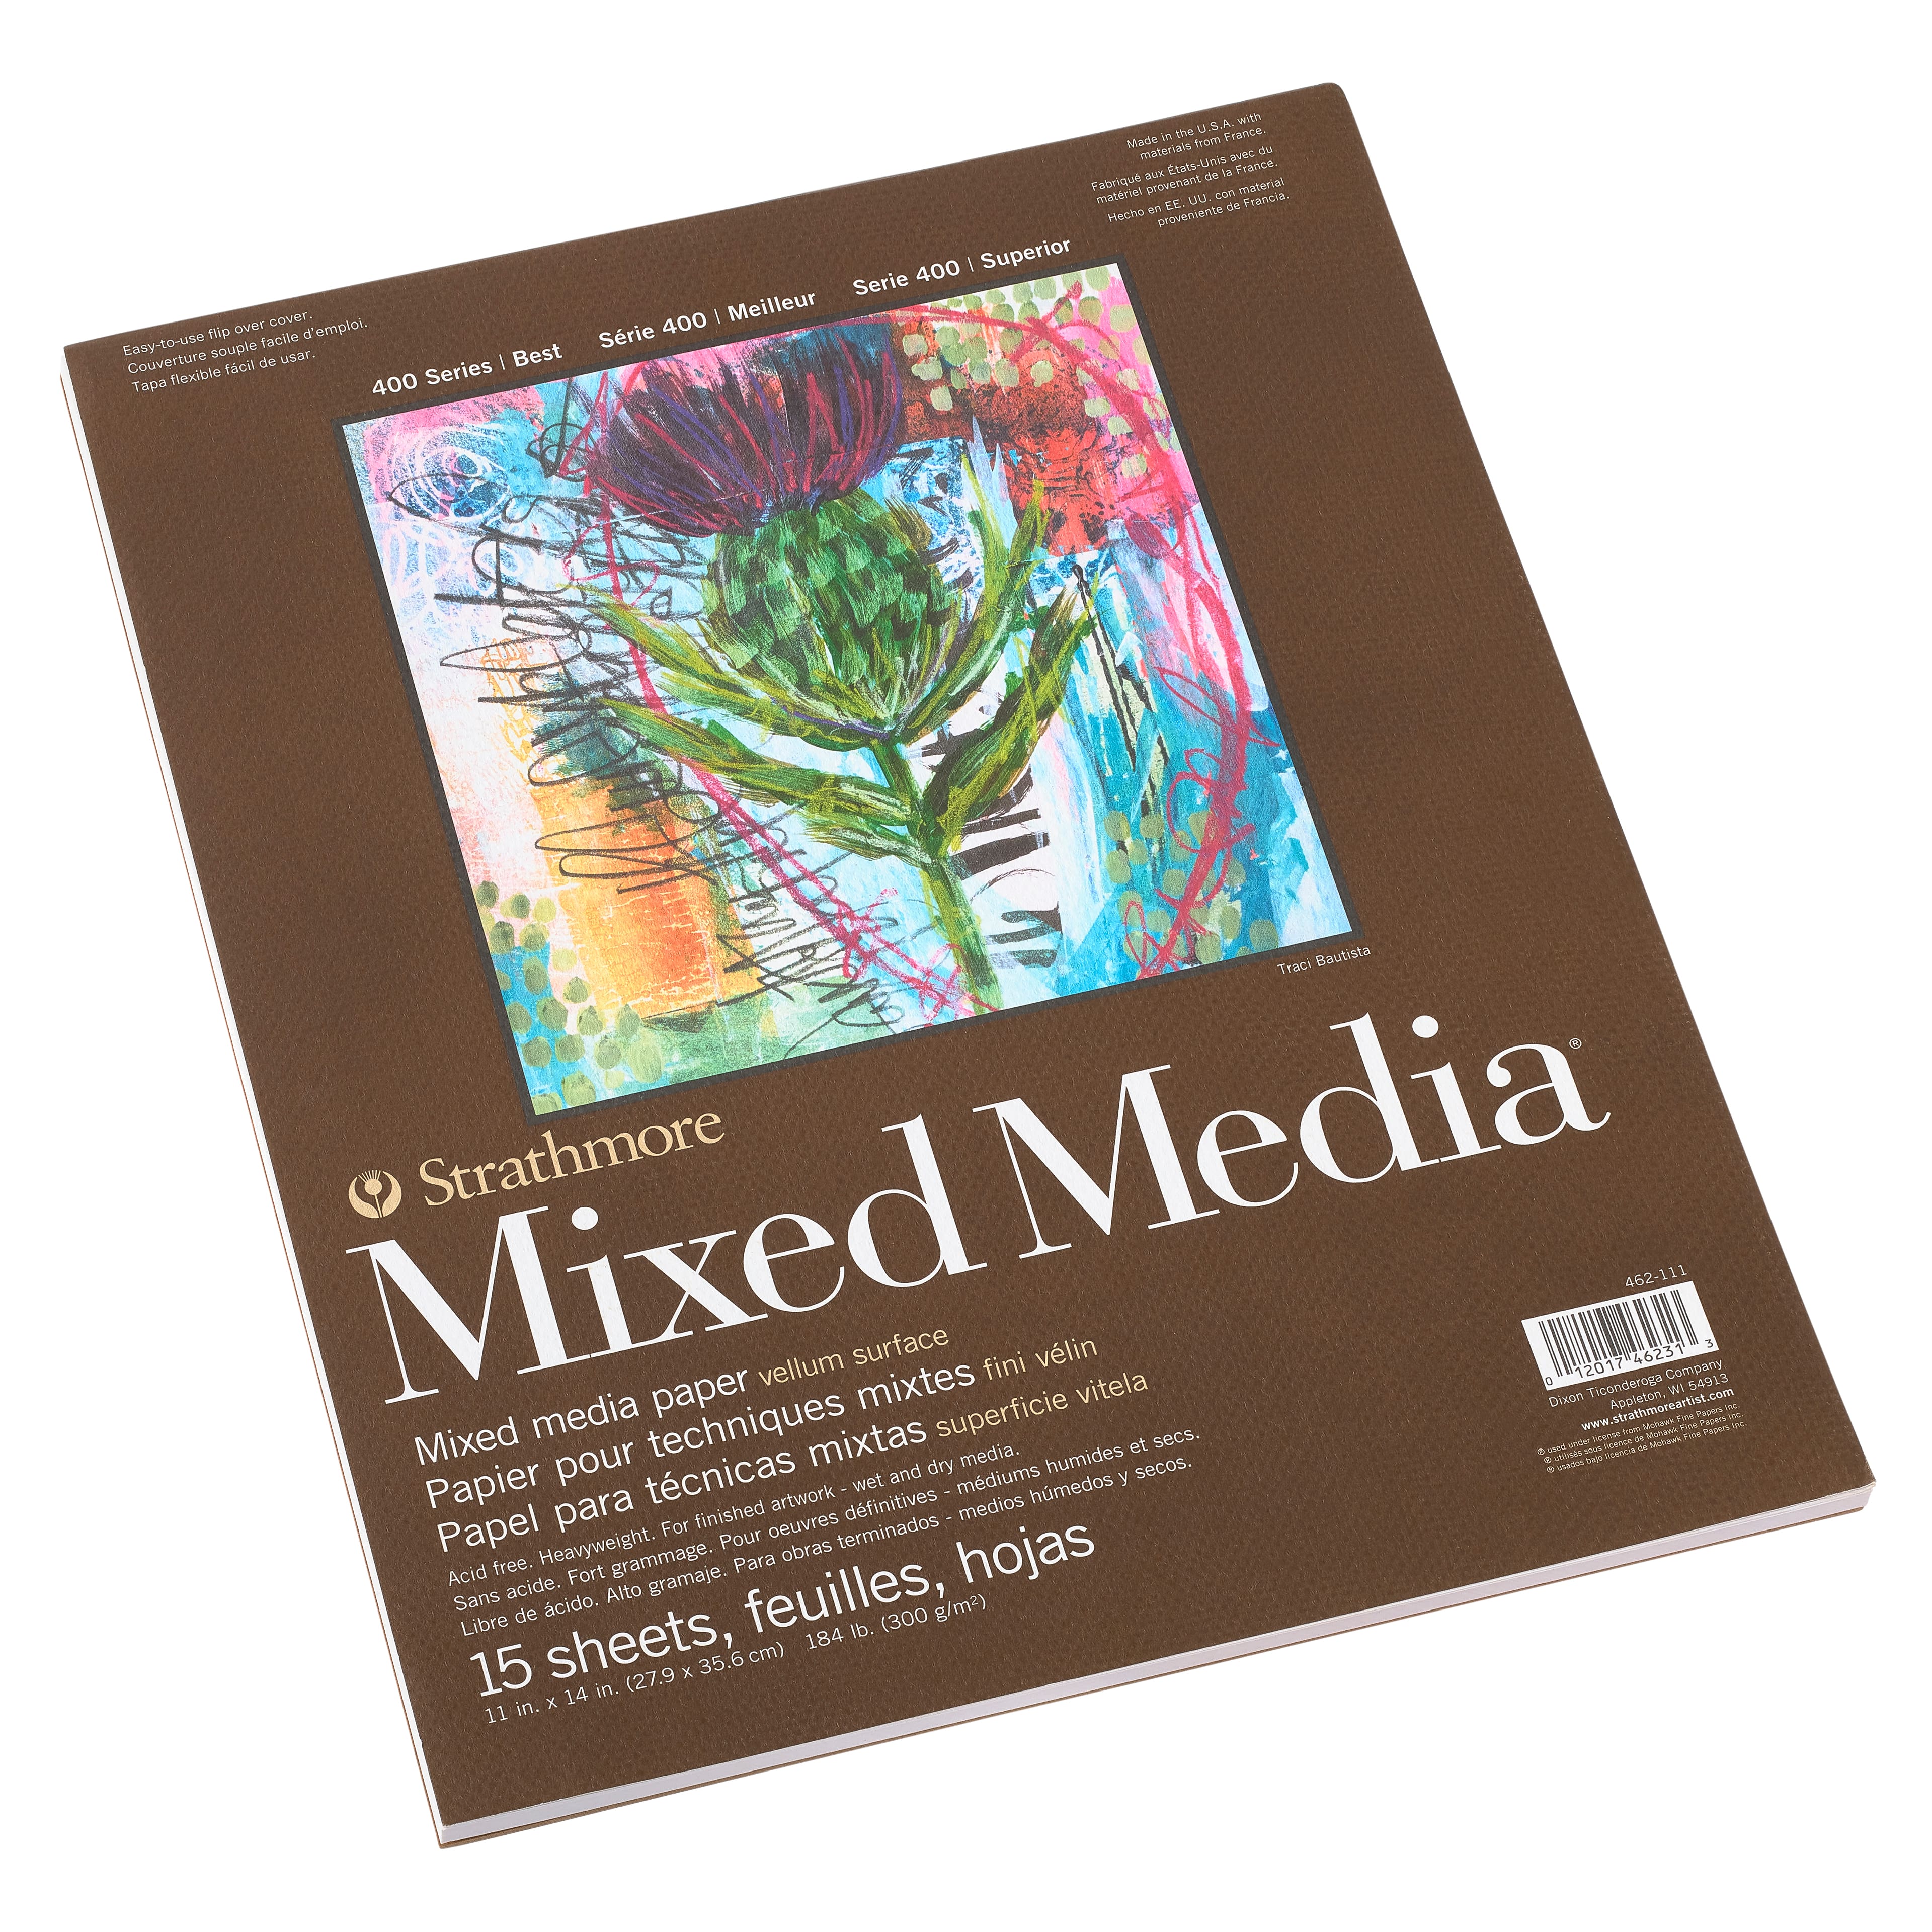 Strathmore 300 Series Mixed Media Pad Wirebound - 5.5x8.5